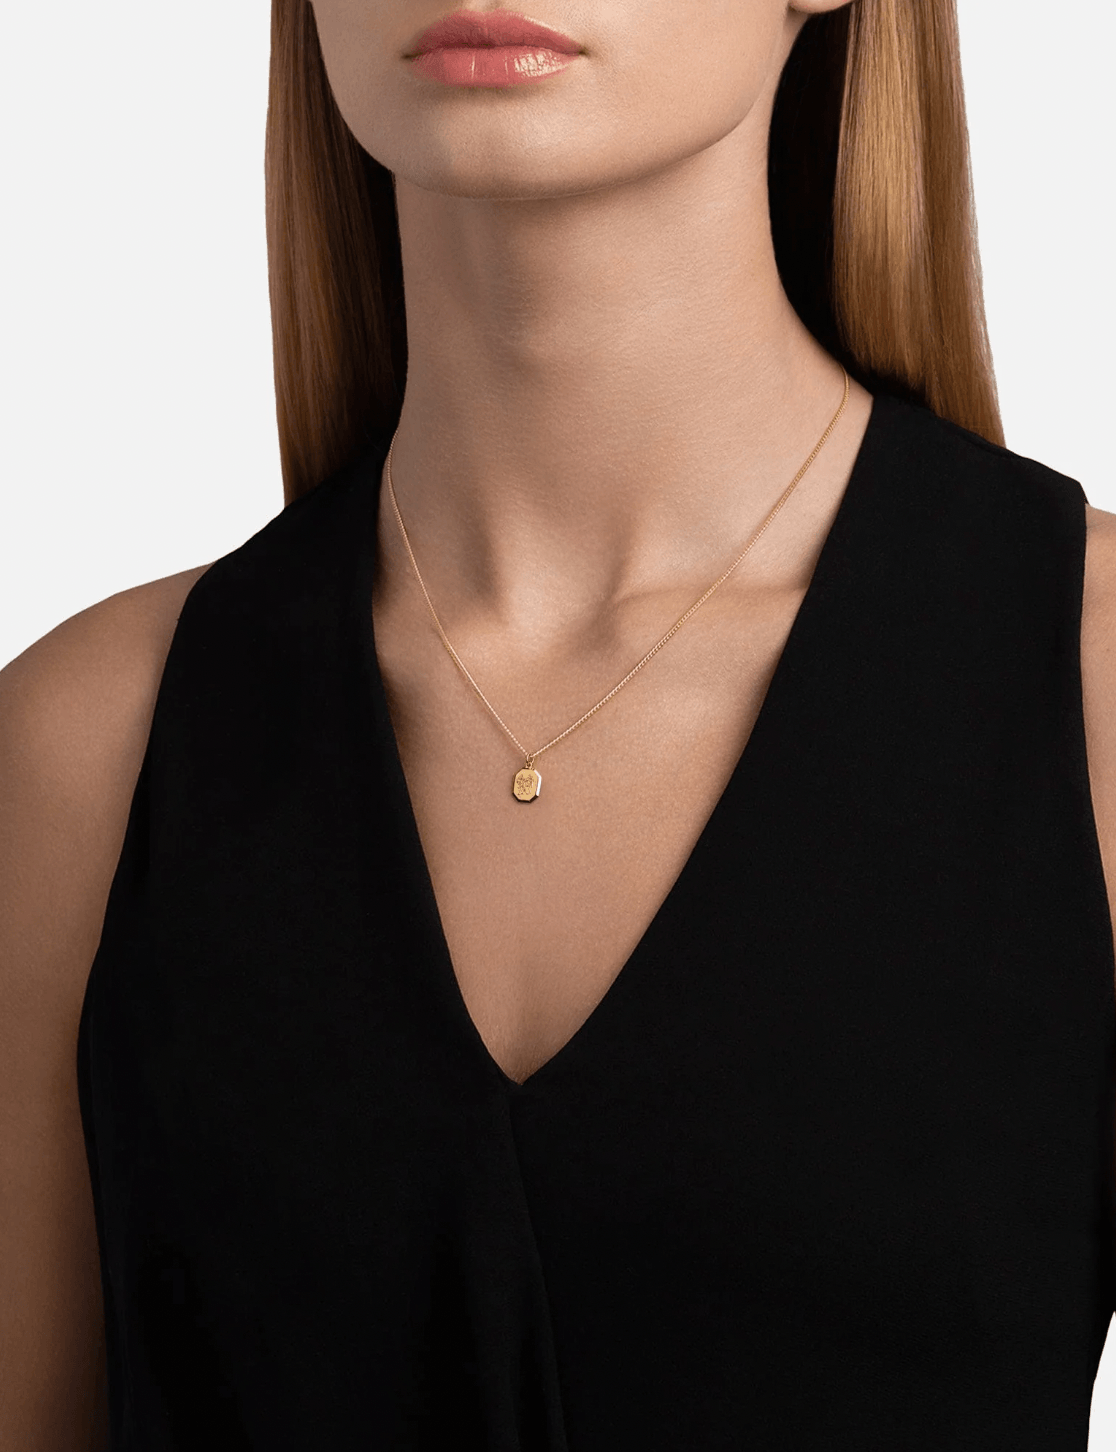 Gemini Nyle Pendant Necklace by Miansai - Haven